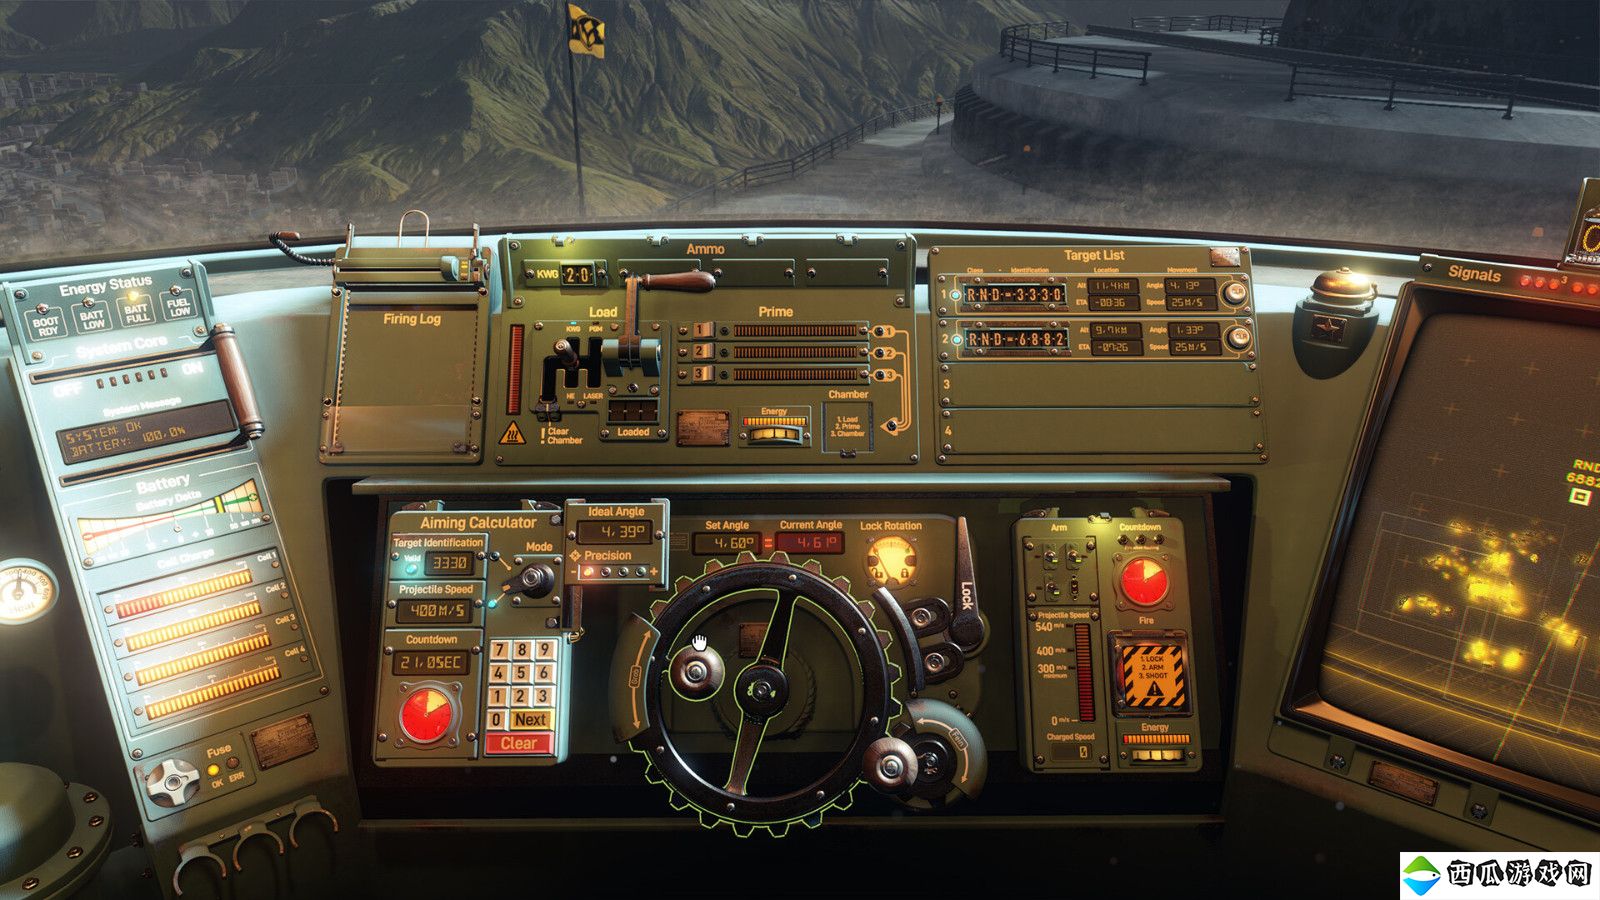 《PVKK: 行星防御炮指挥官》Steam页面上线 发售日待定